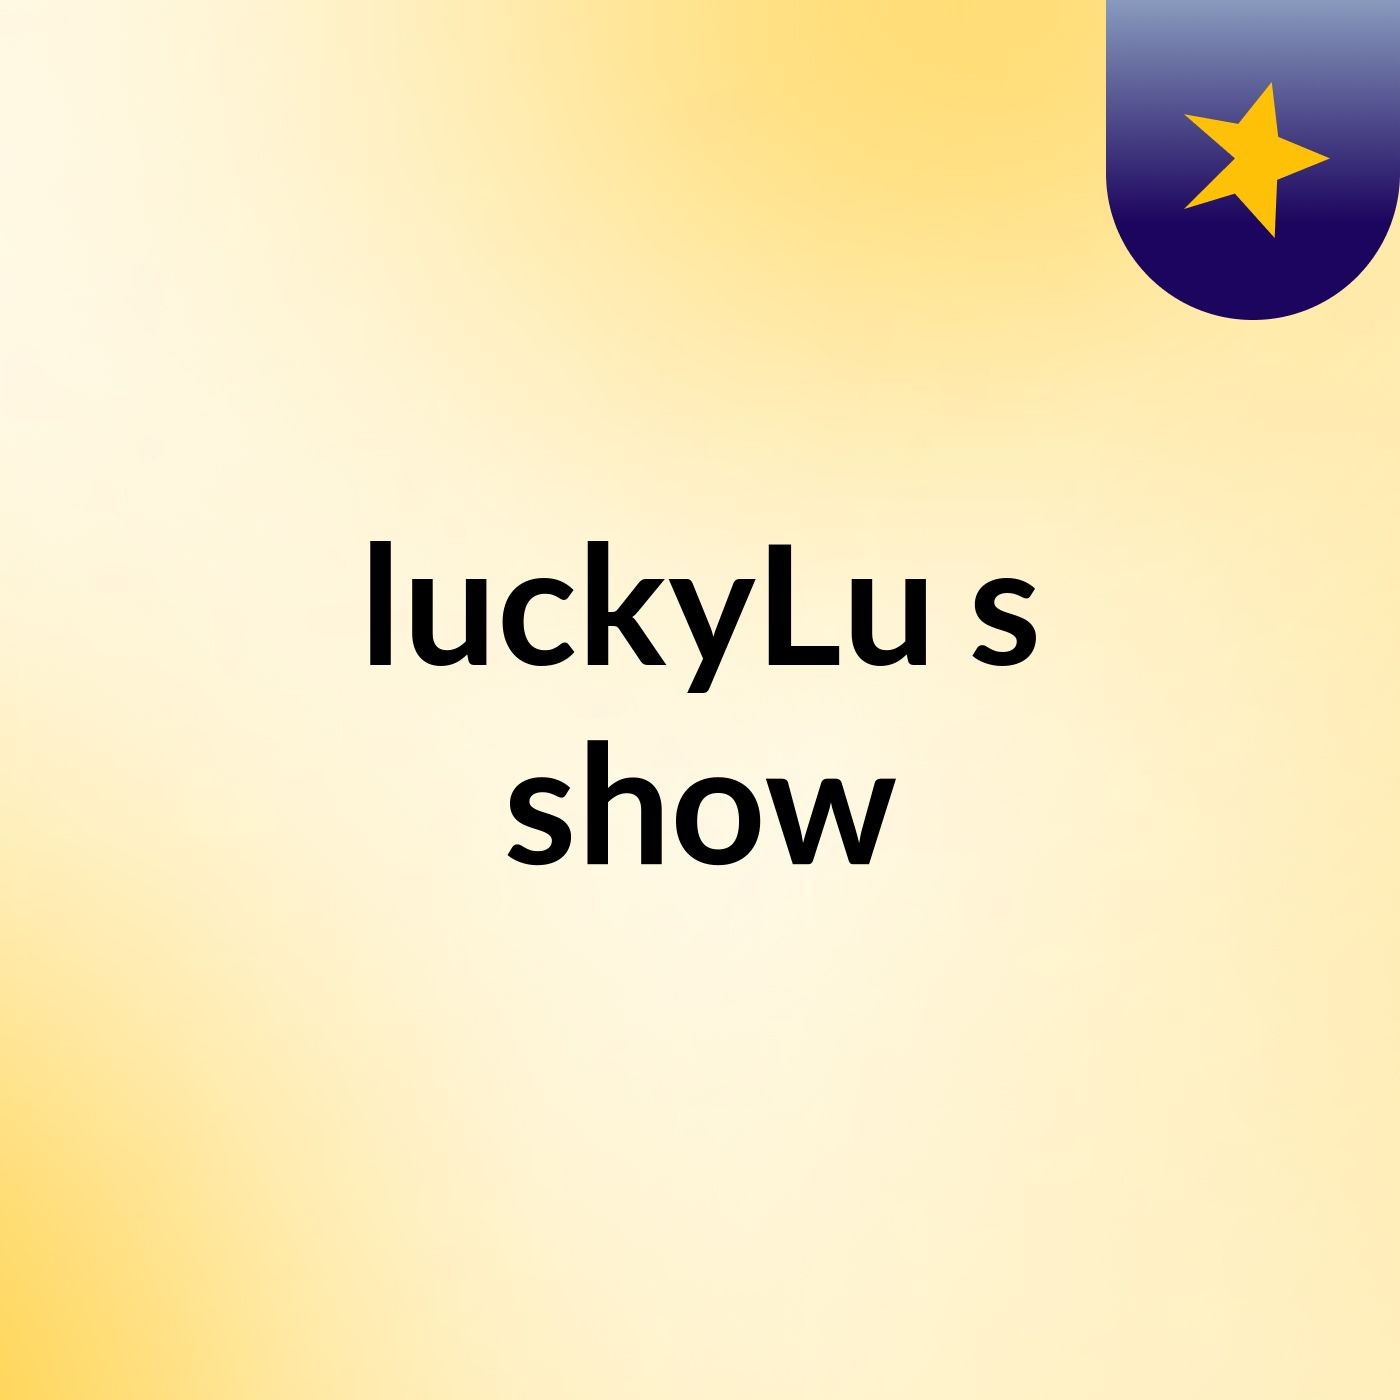 luckyLu's show